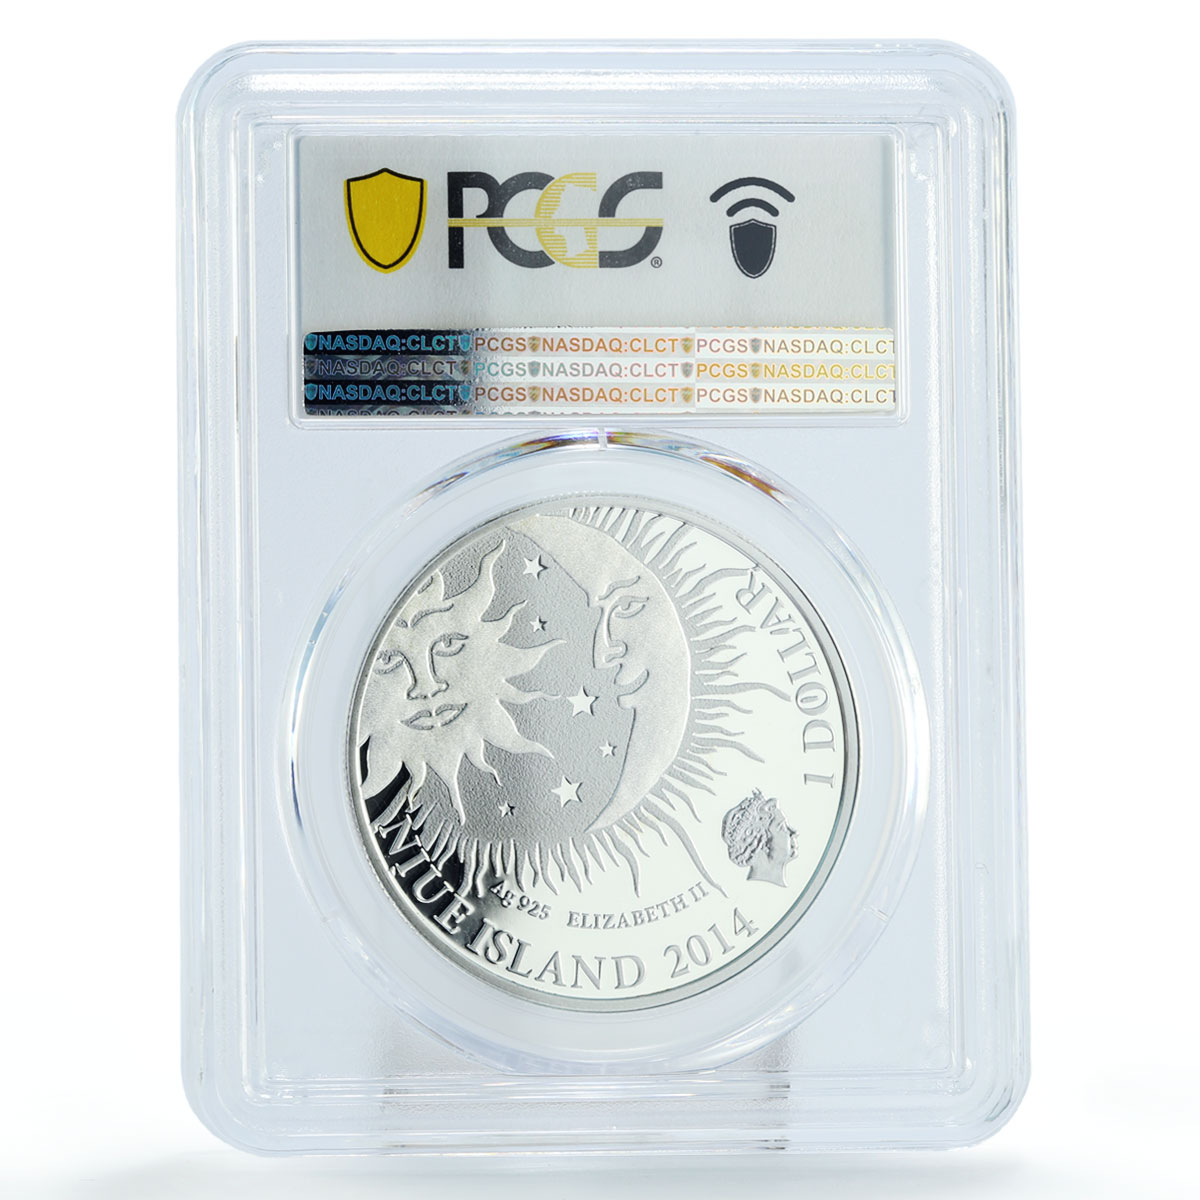 Niue 1 dollar Zodiac Signs series Virgo PR70 PCGS colored silver coin 2014